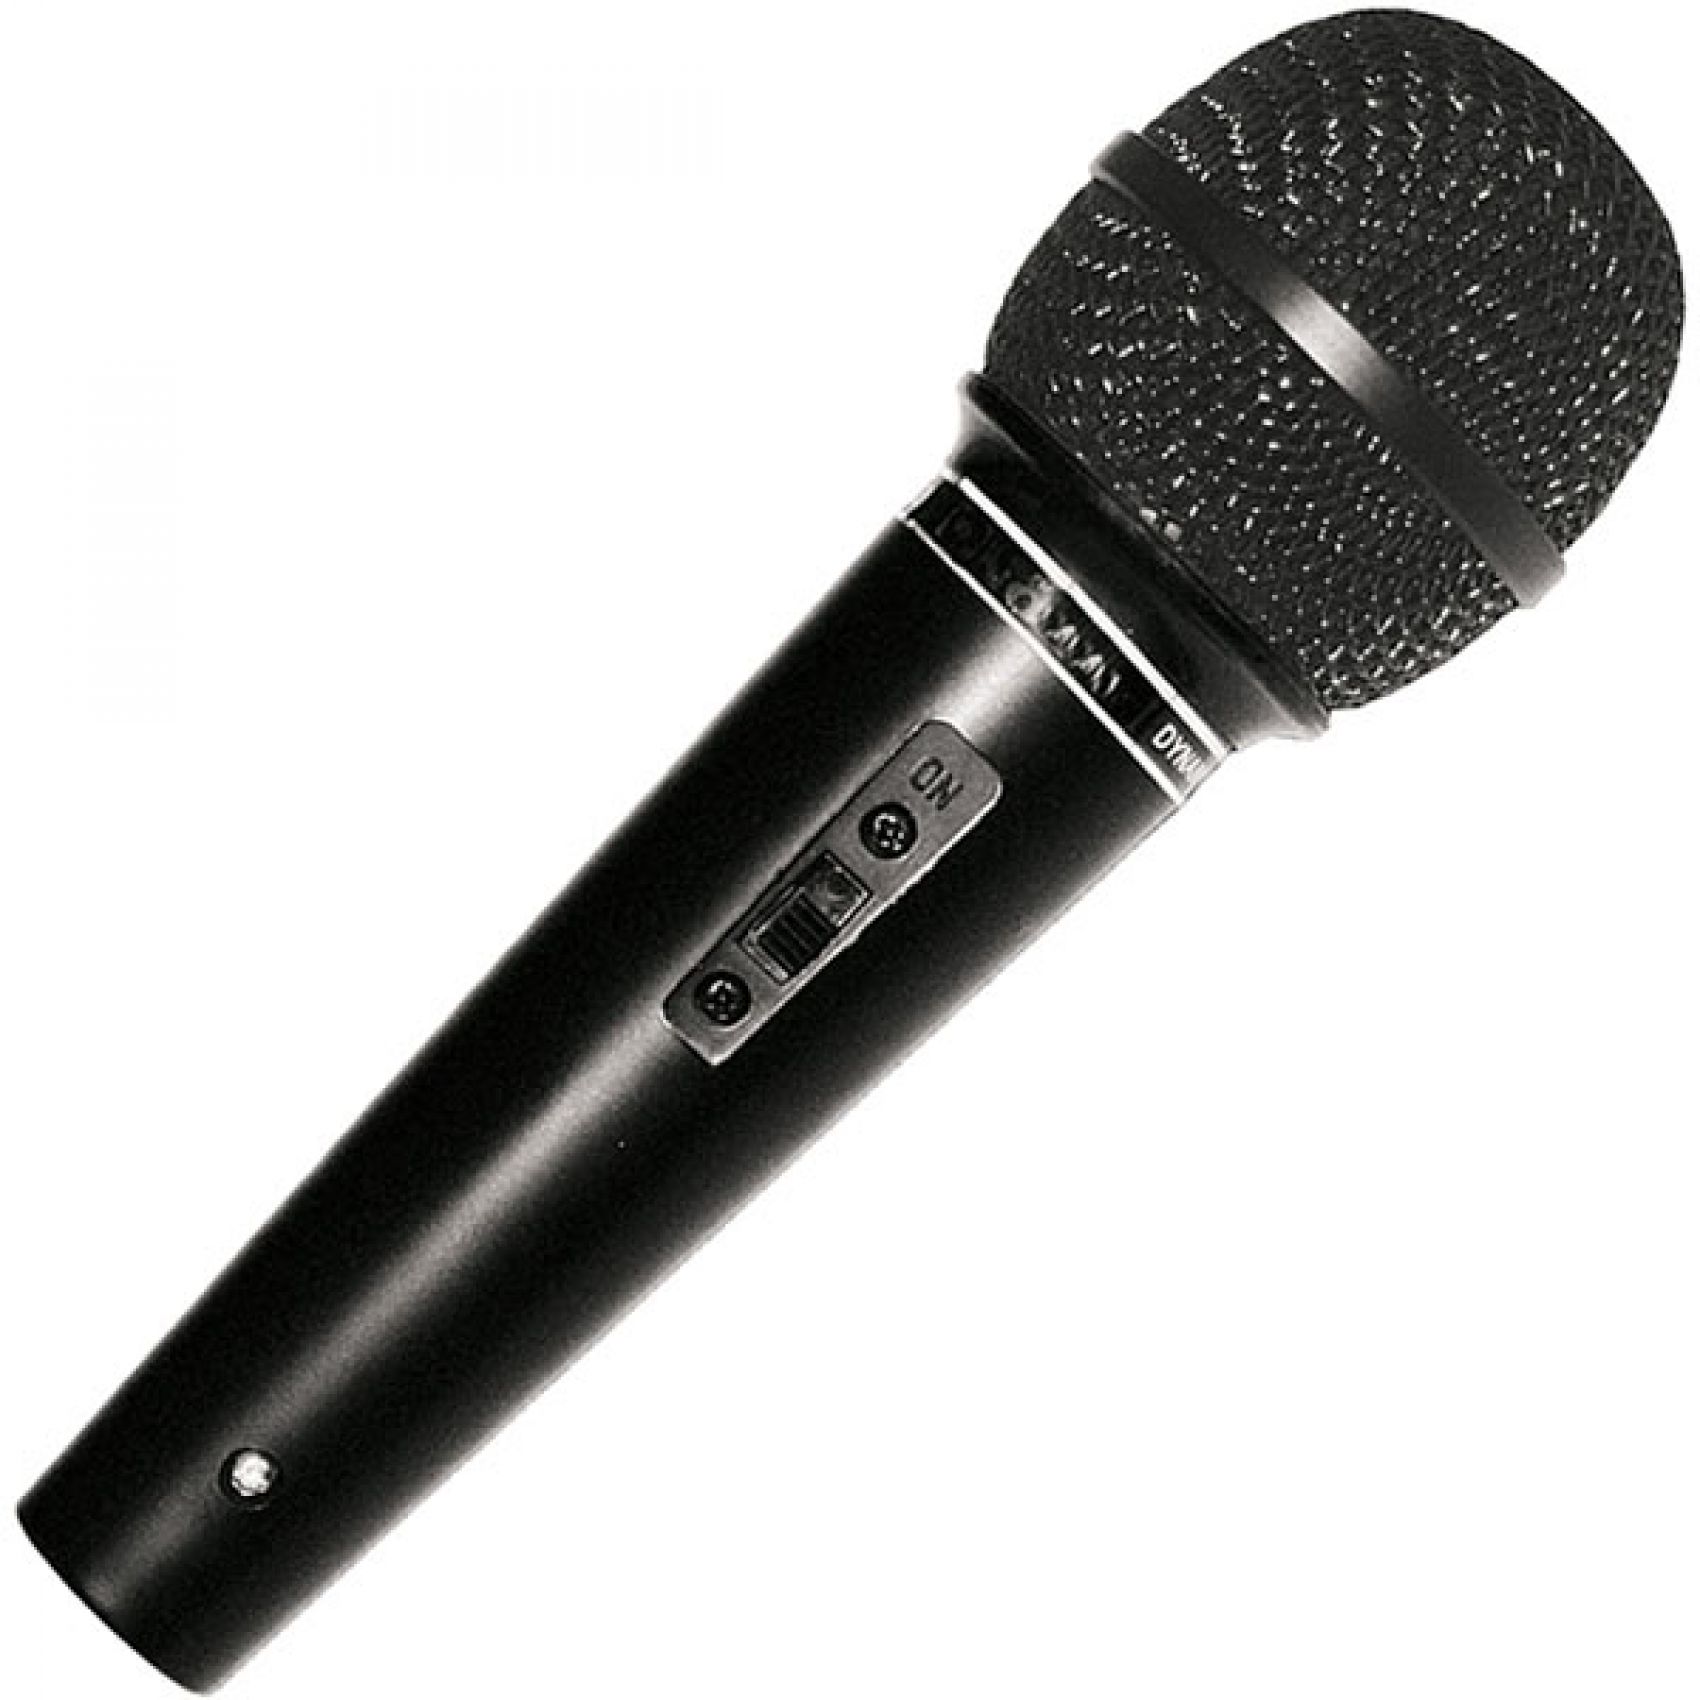 DM591 - MICROFONO DINAMICO per karaoke + valigetta